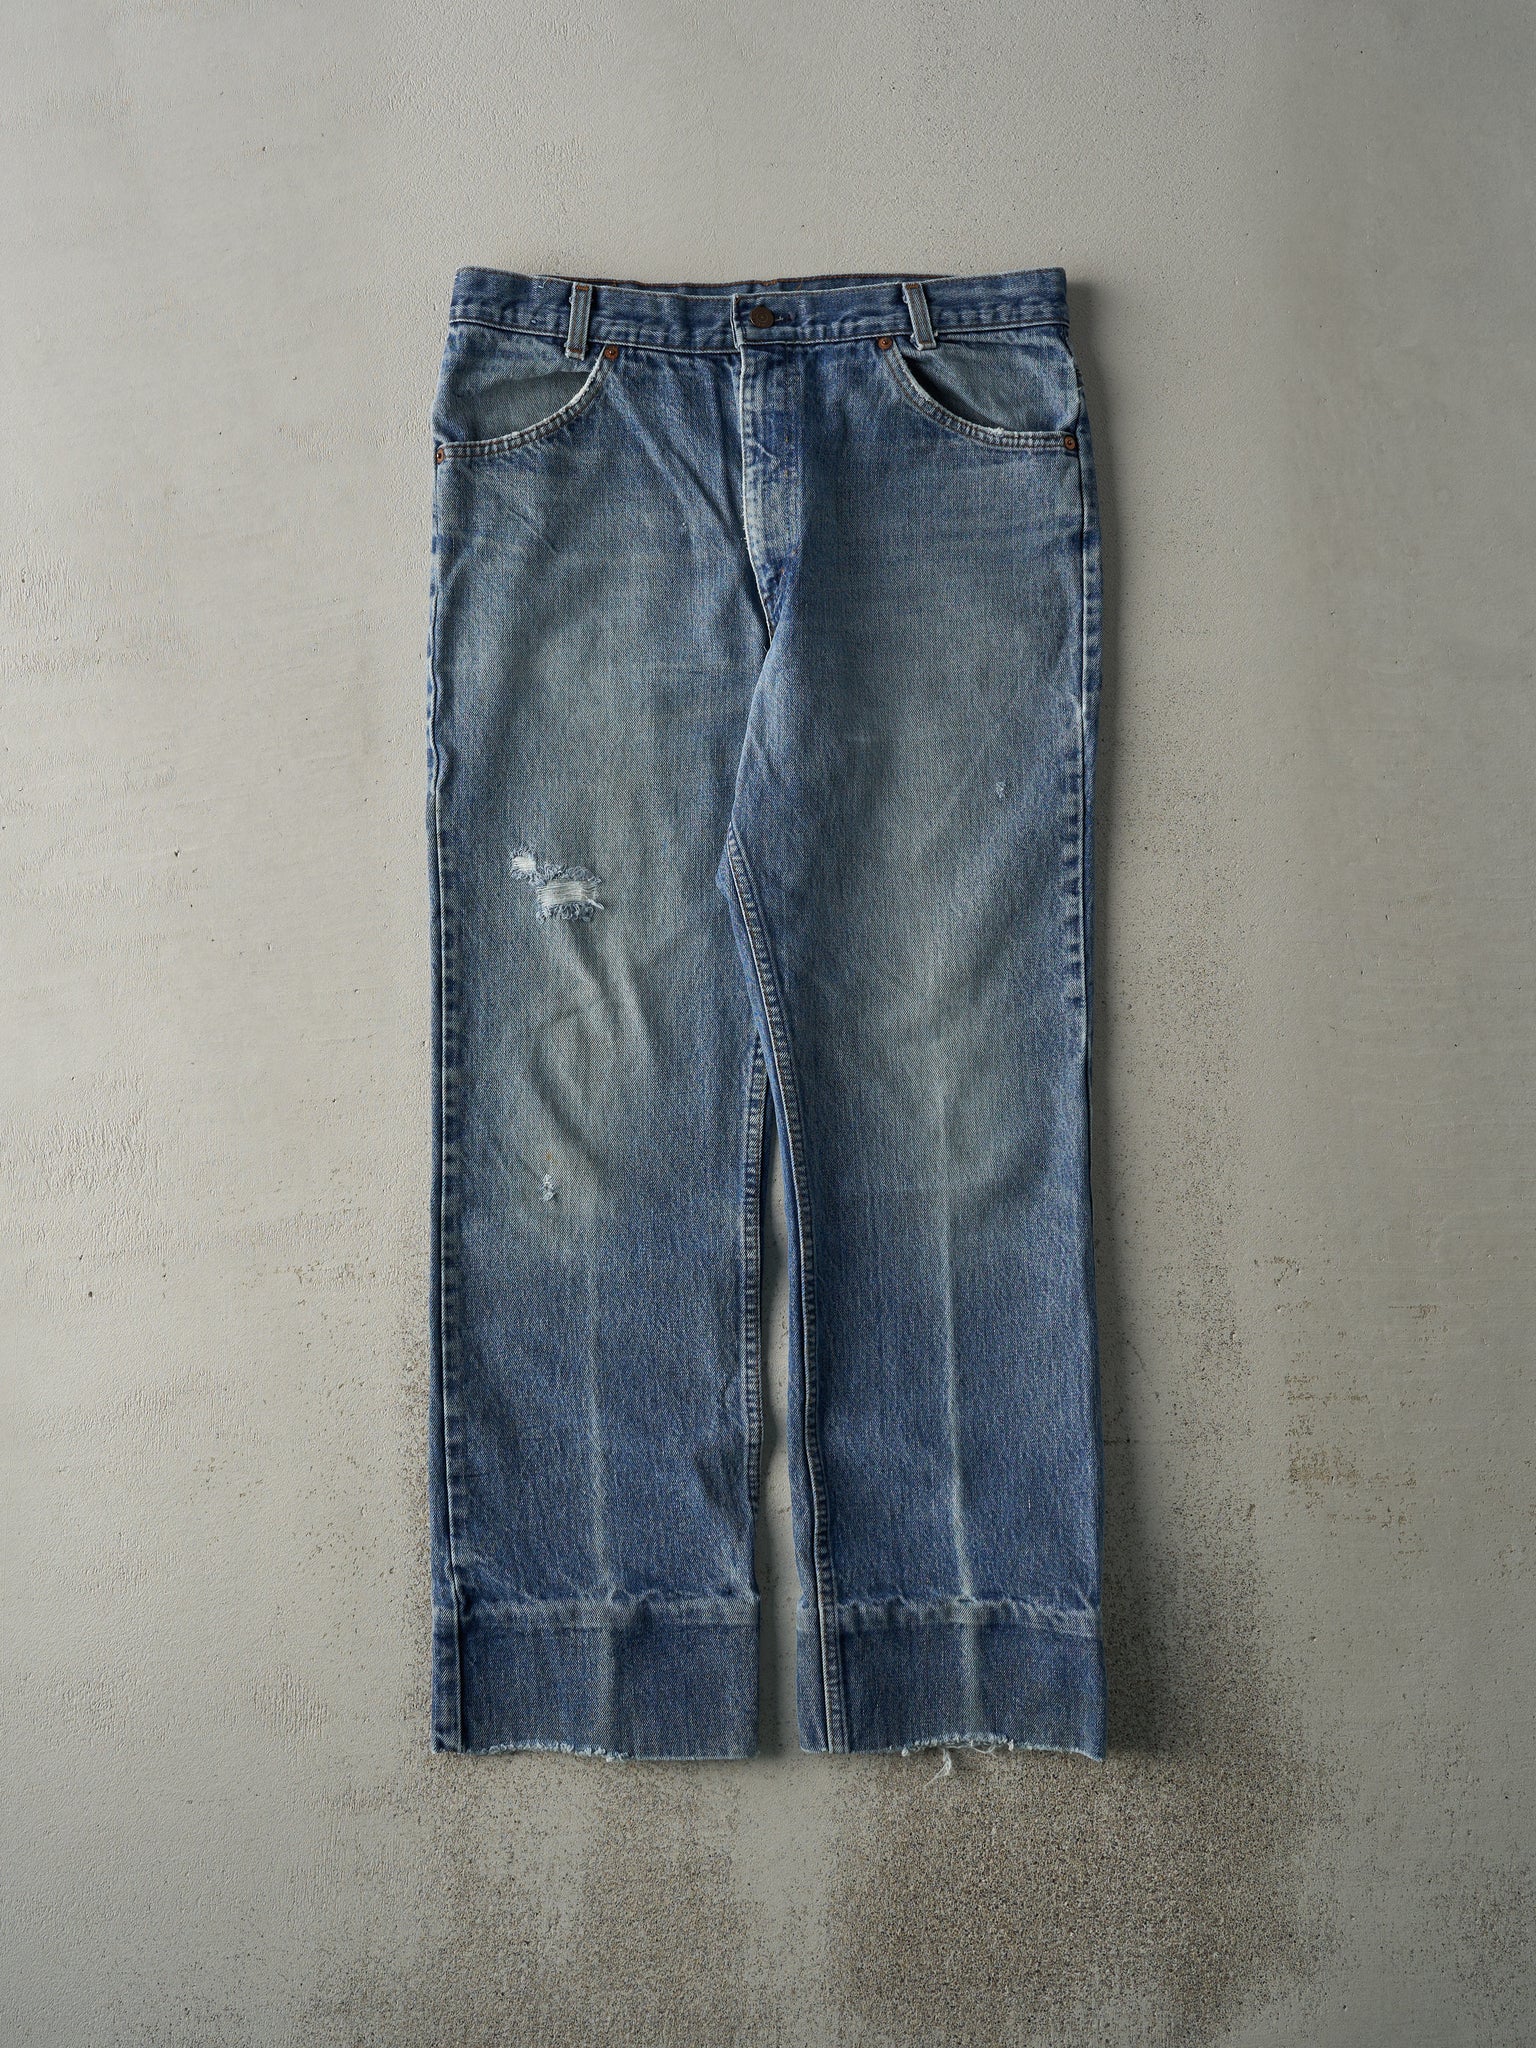 Vintage 80s Light Wash Levi's Orange Tab Released Hem Jeans (34x29)